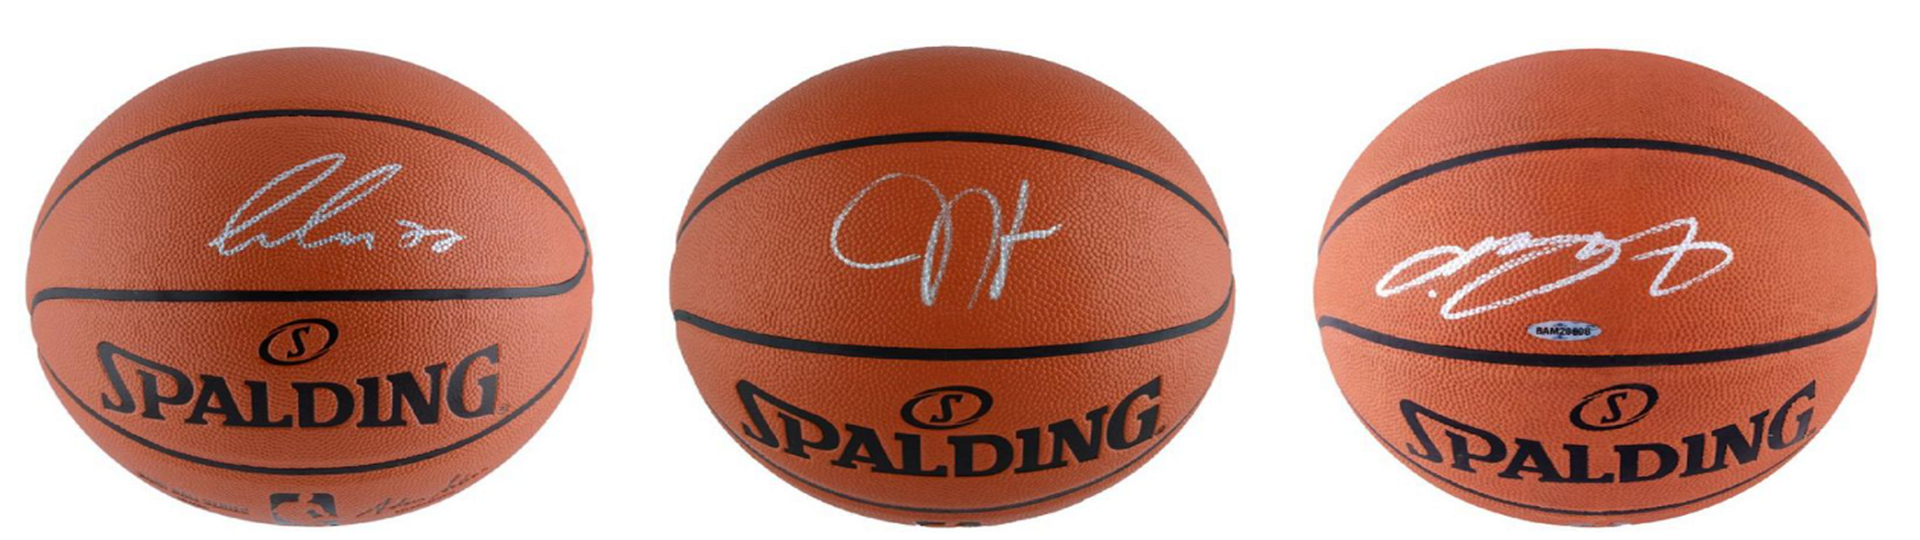 Autographed NBA Basketball MVP players by NY Elizabeth